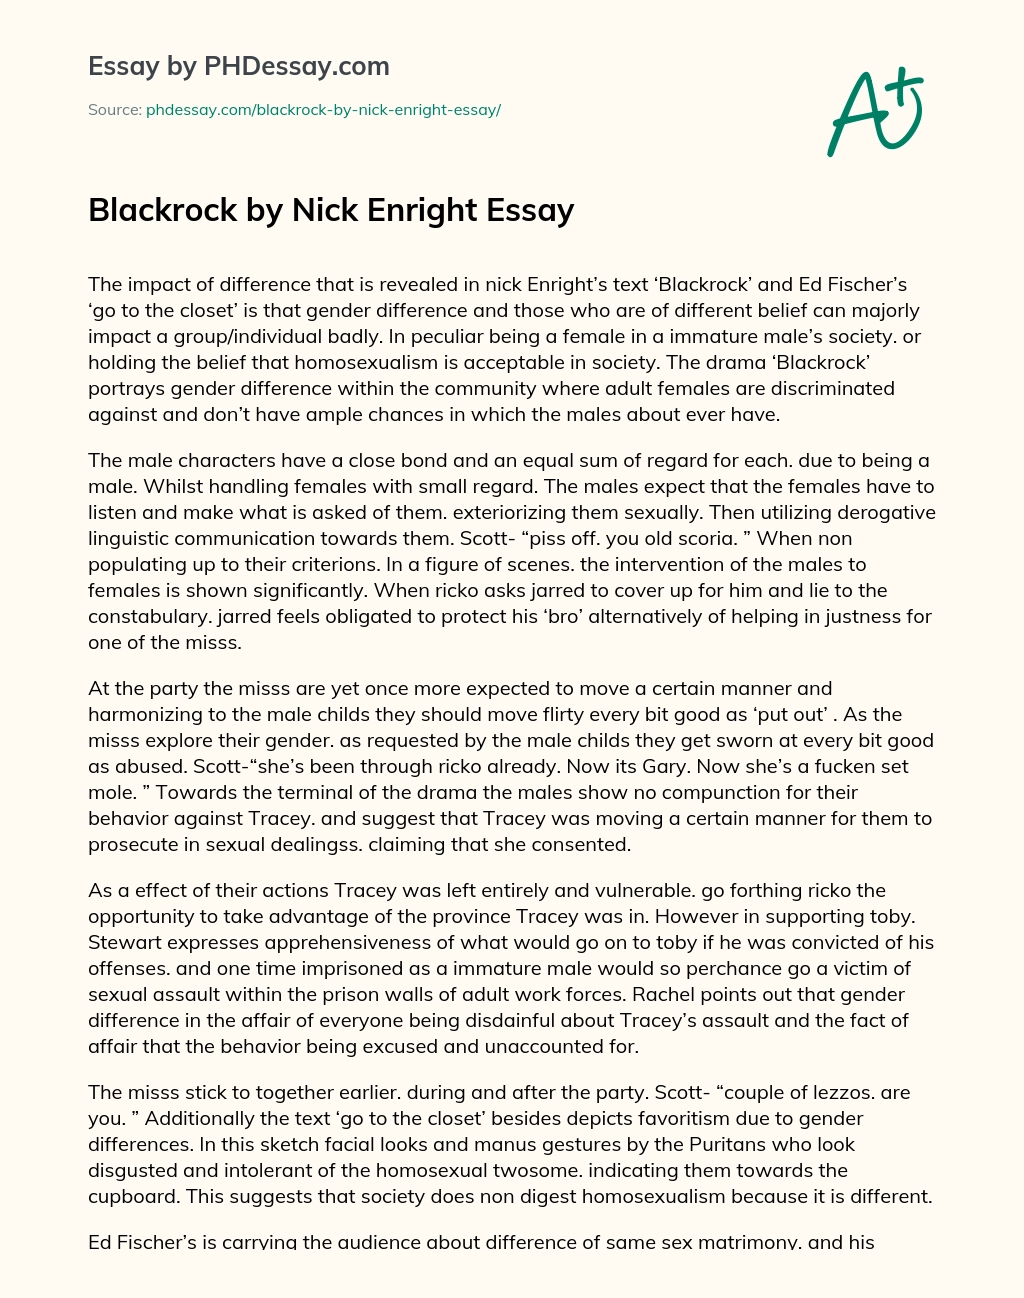 Blackrock by Nick Enright Essay essay